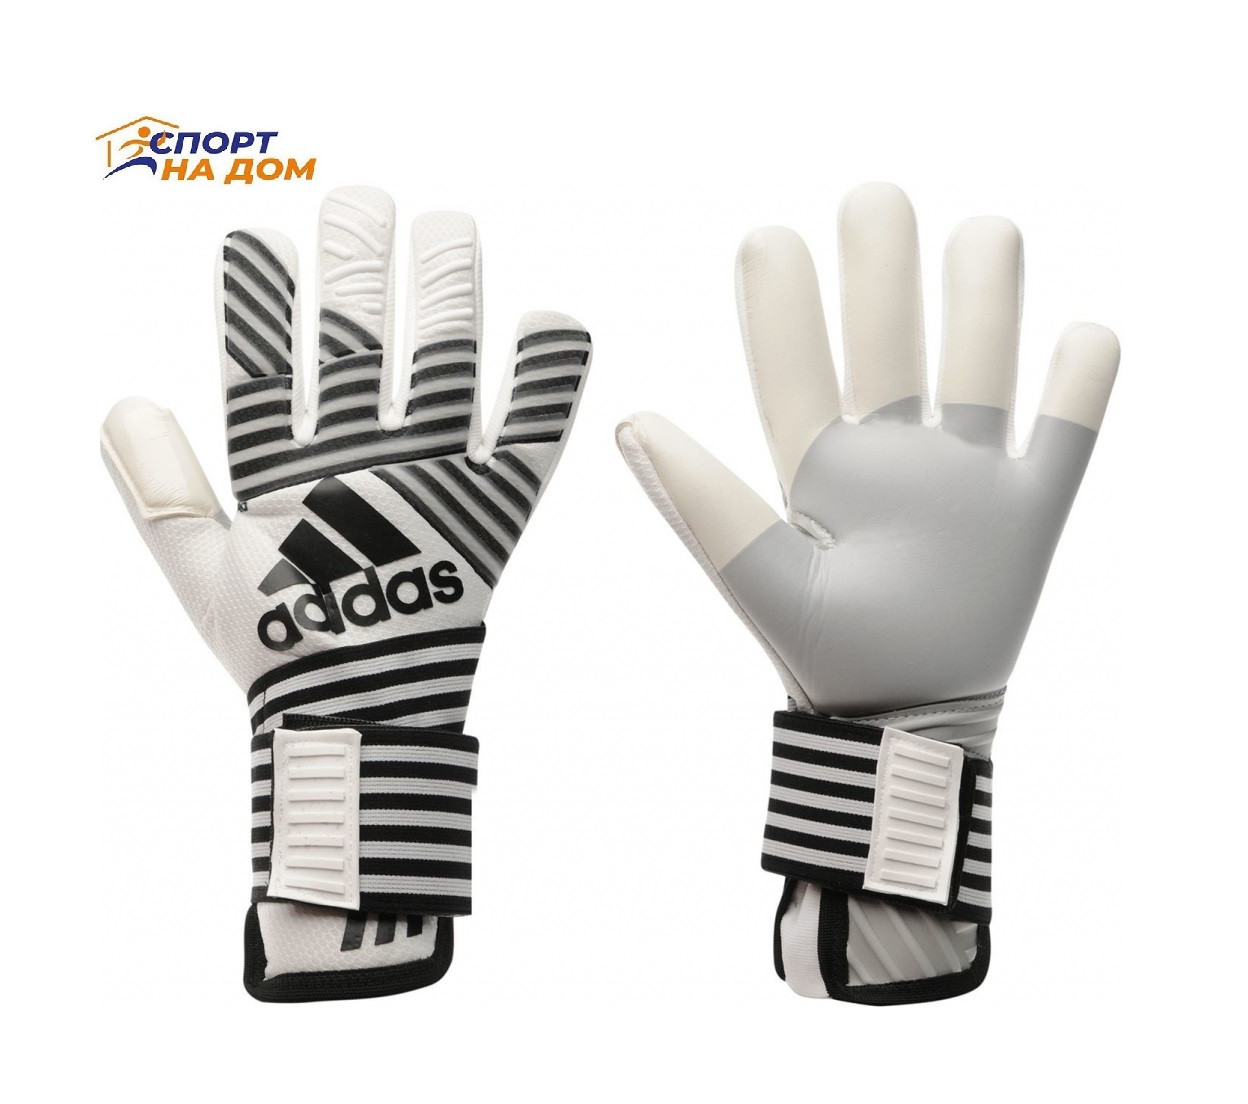 Вратарские перчатки Adidas Predator Pro (реплика)